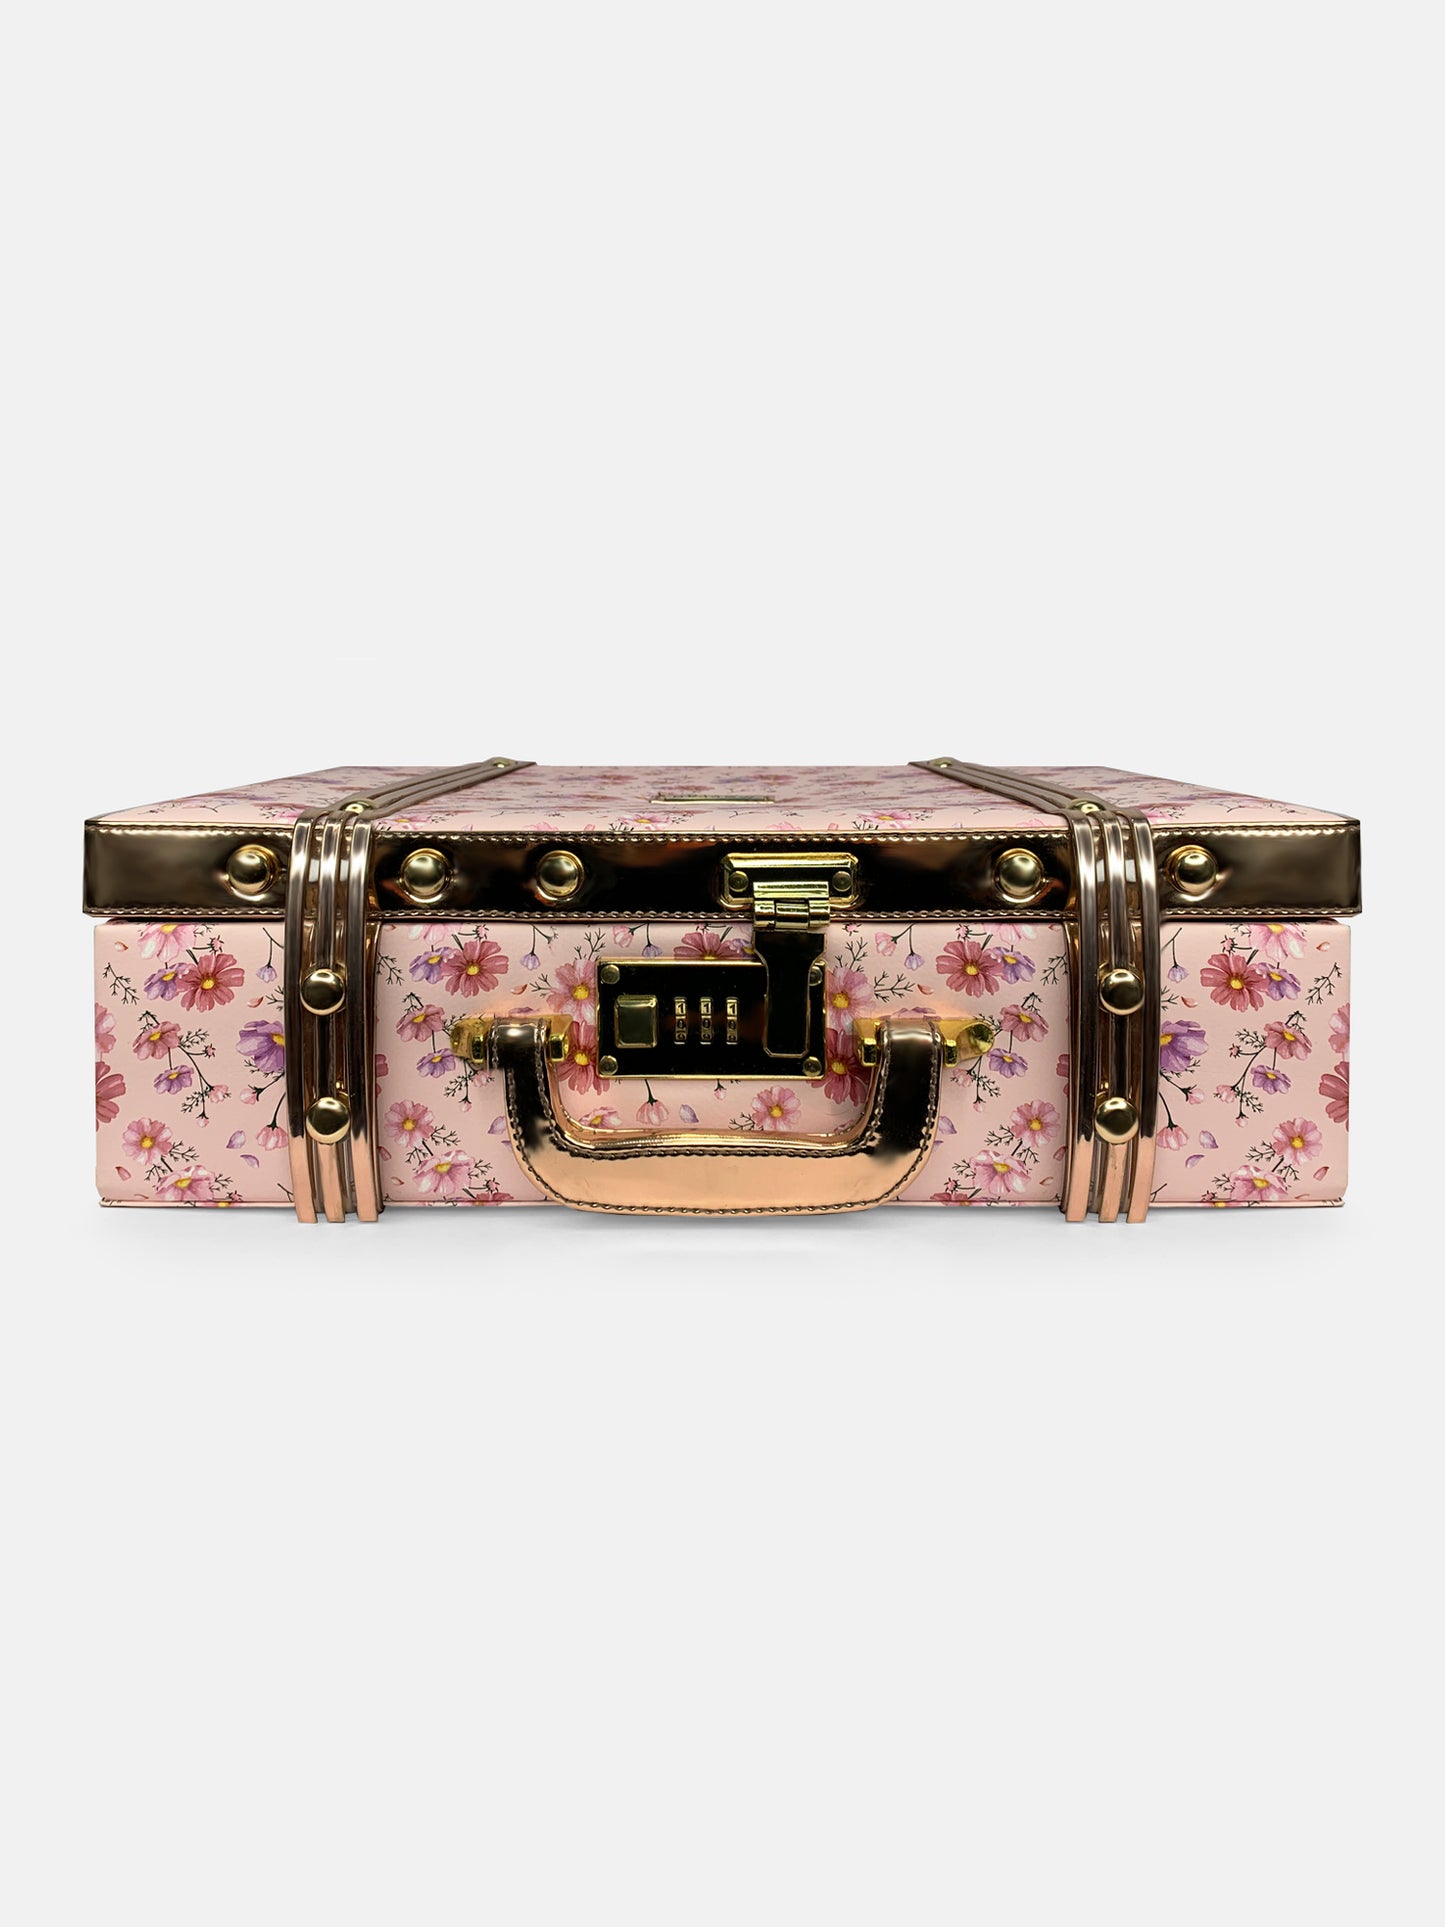 Floral Printed & Rosegold Trunk cum Luggage Bag | Modern Myth